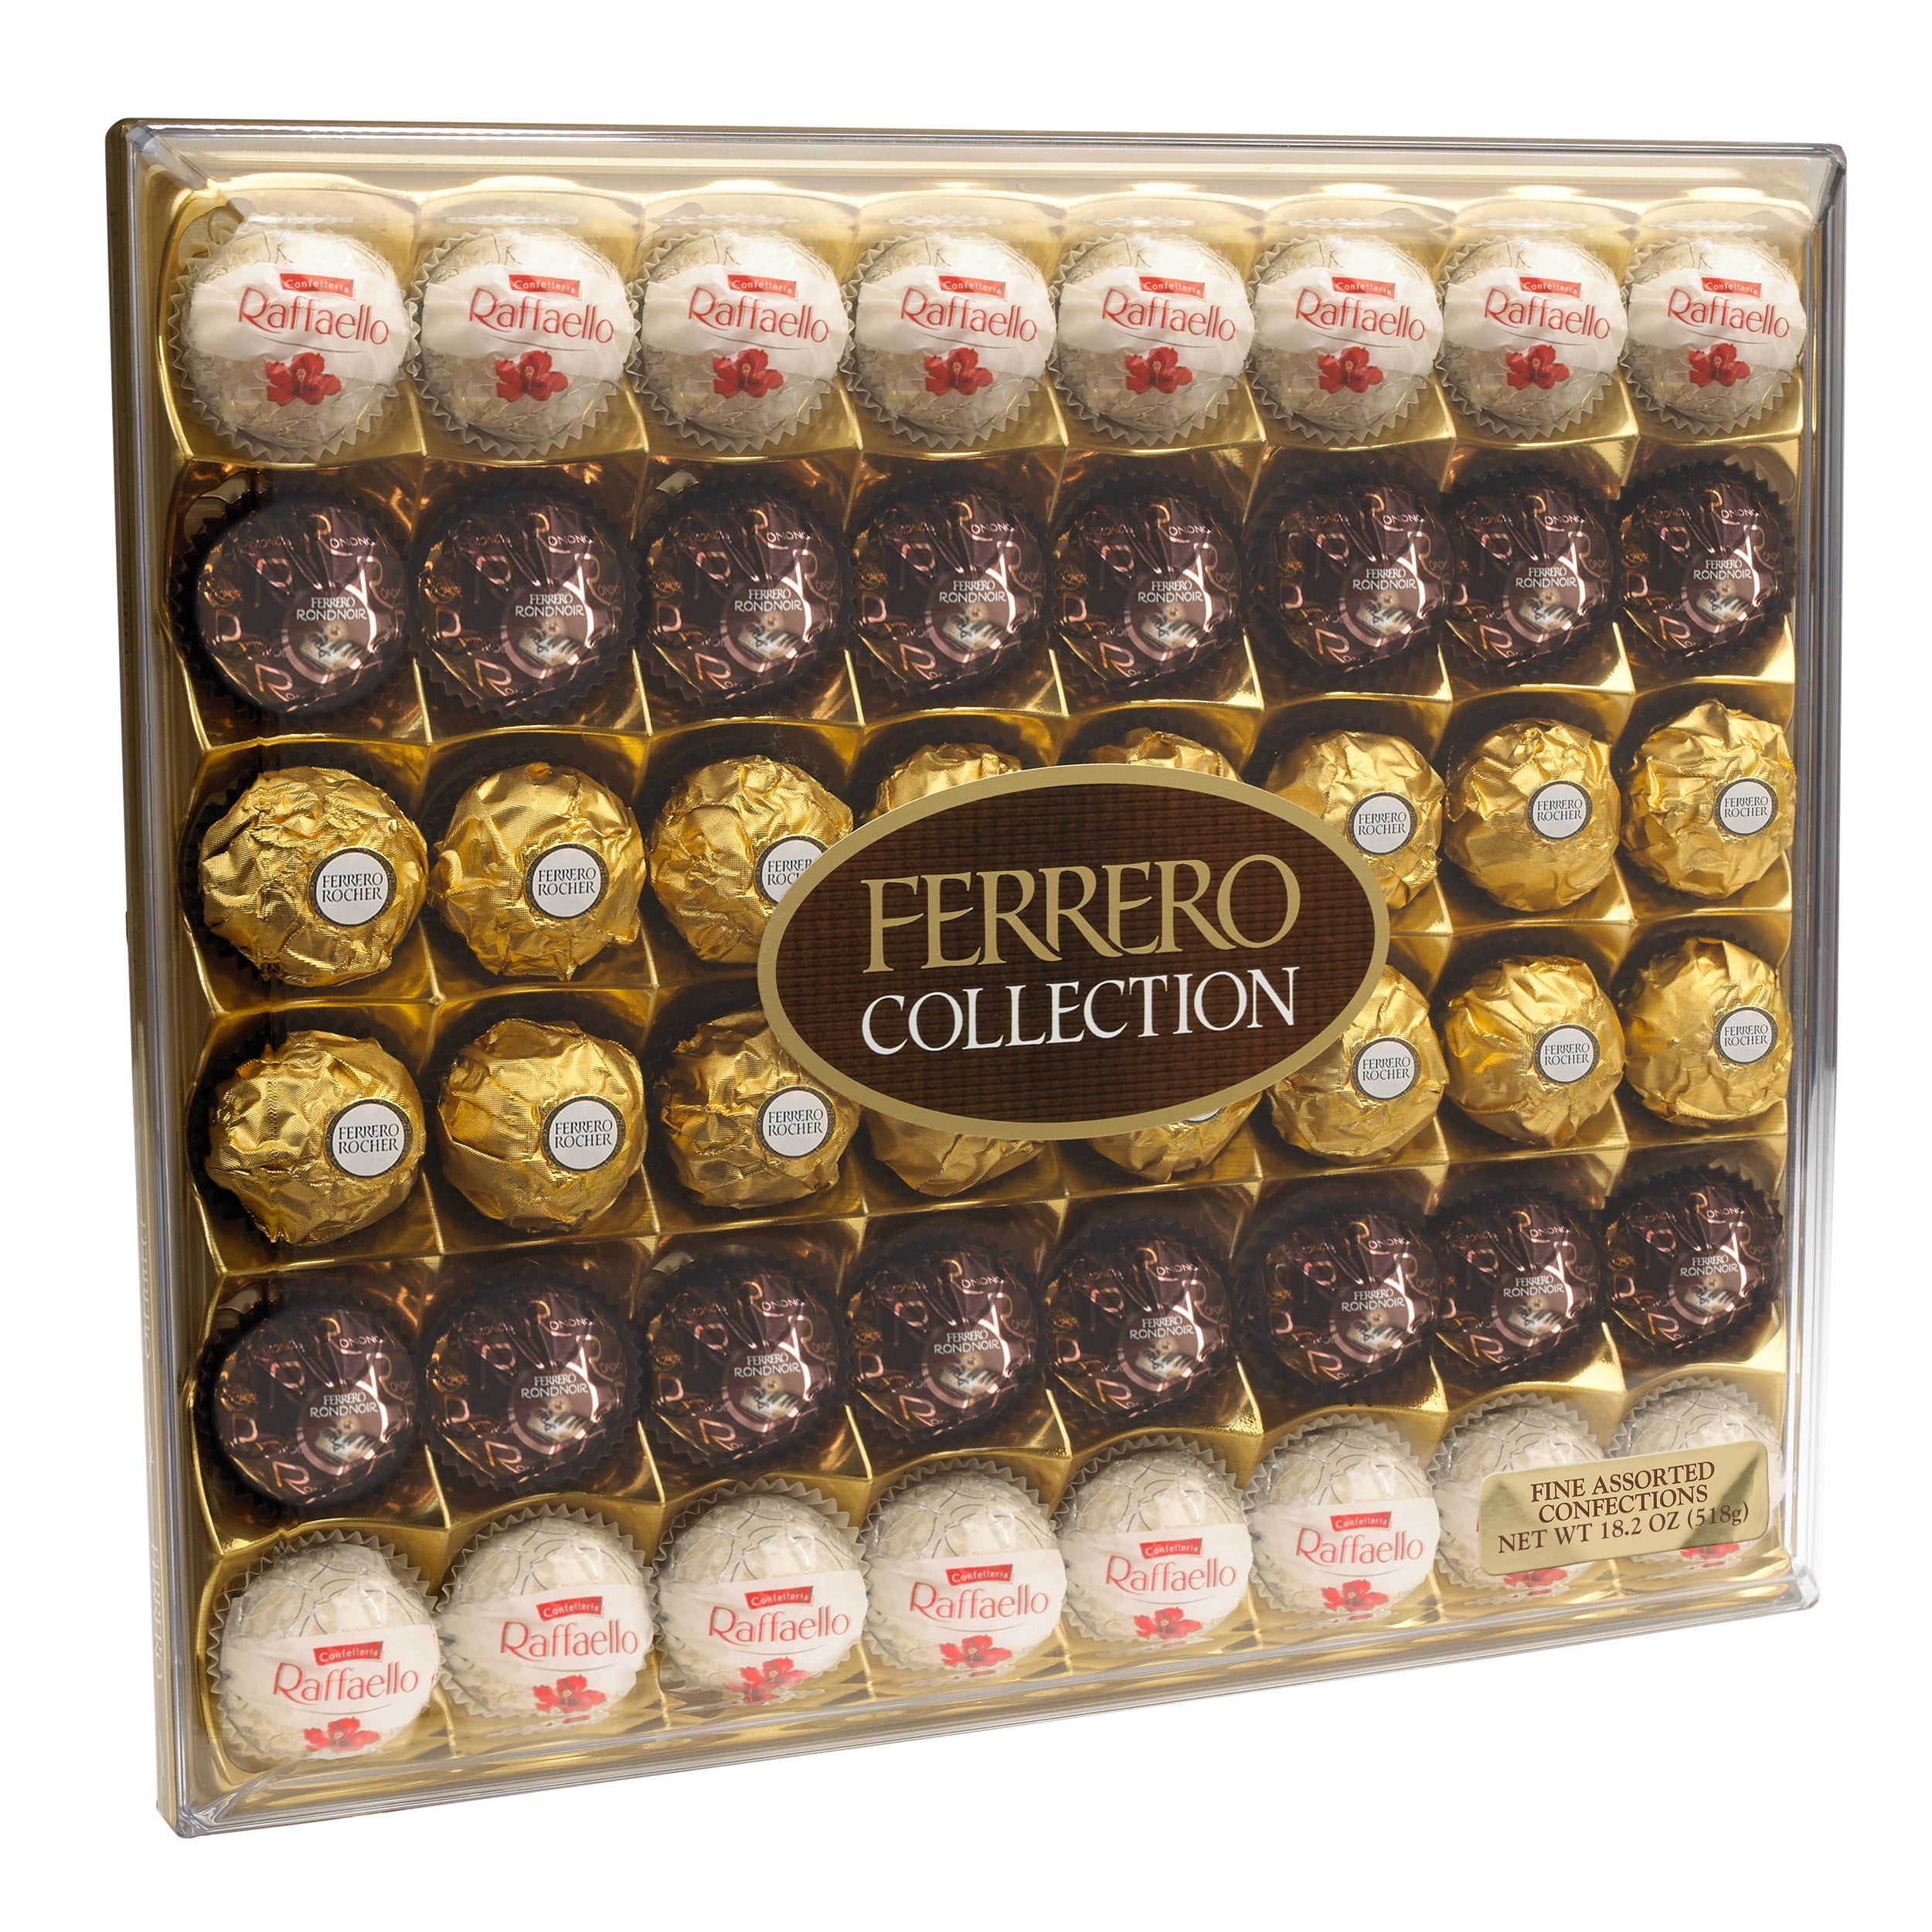 Ferrero Collection Premium Assorted Hazelnut Chocolate and Coconut